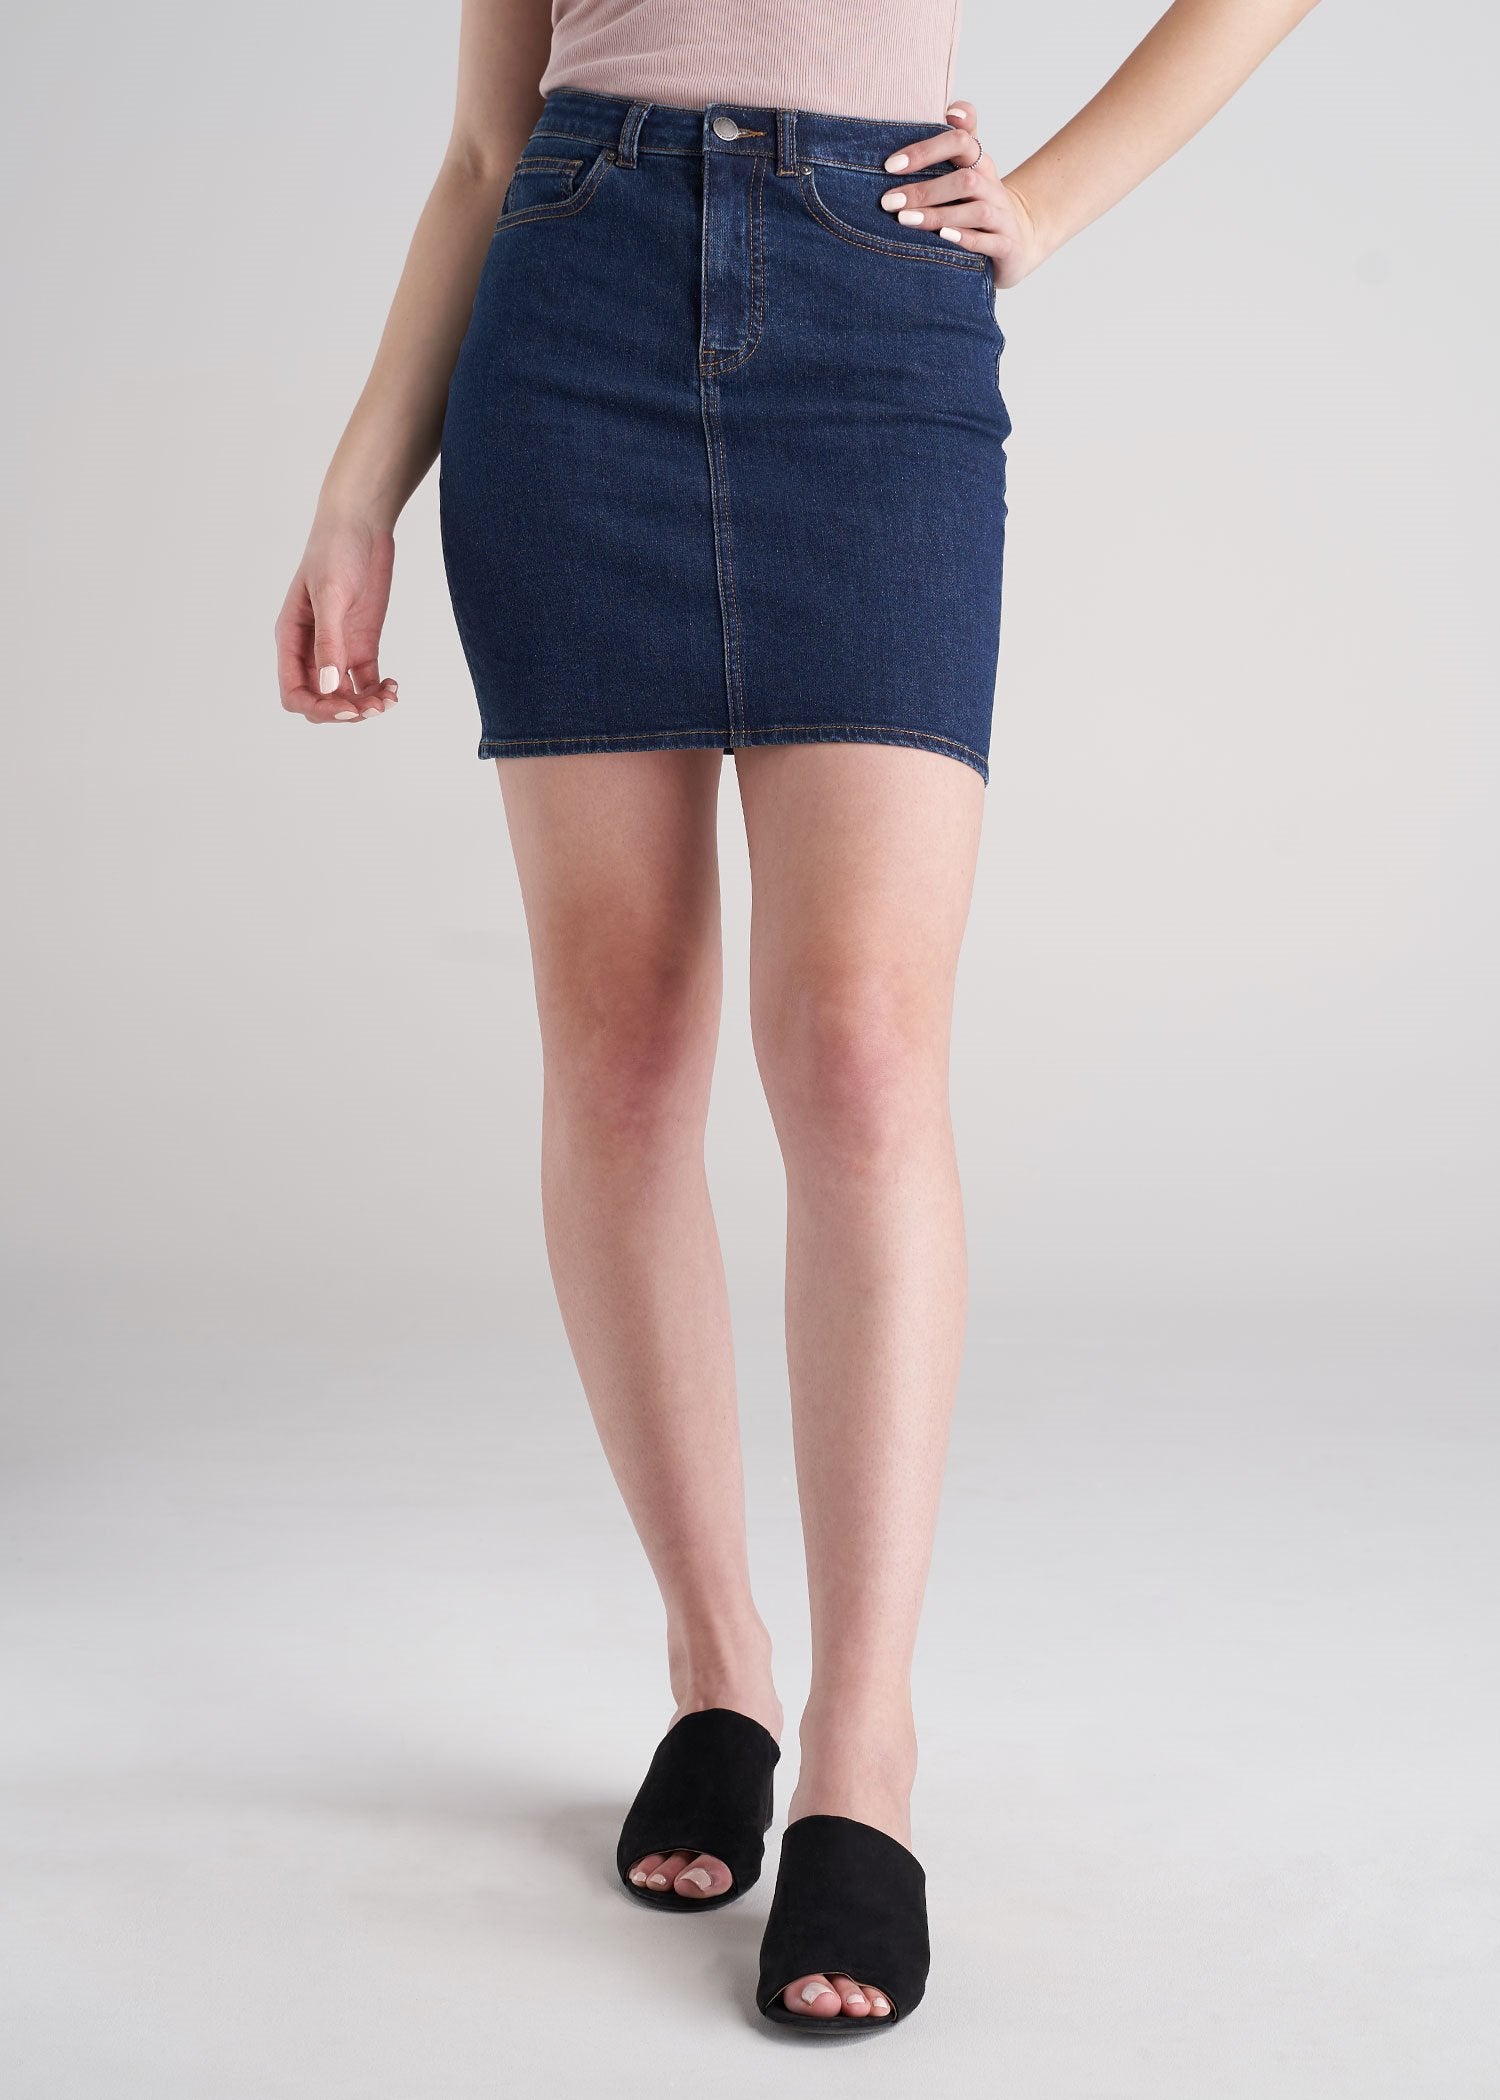 Classic Women's Tall Denim Skirt in Washed Indigo Blue